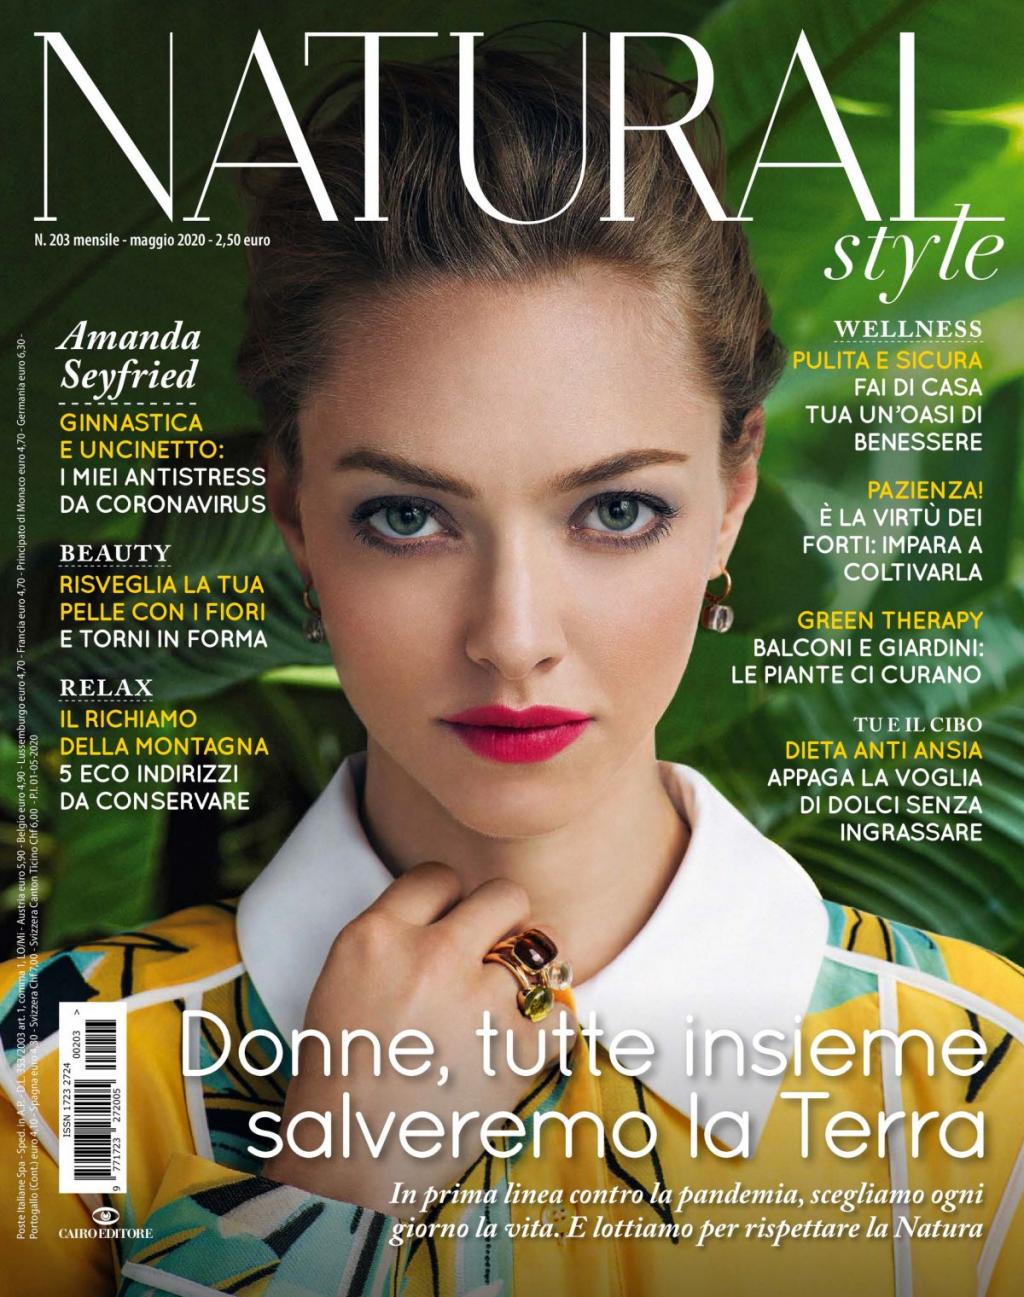 amanda-seyfried-in-natural-style-magazine-may-2020-3.jpg